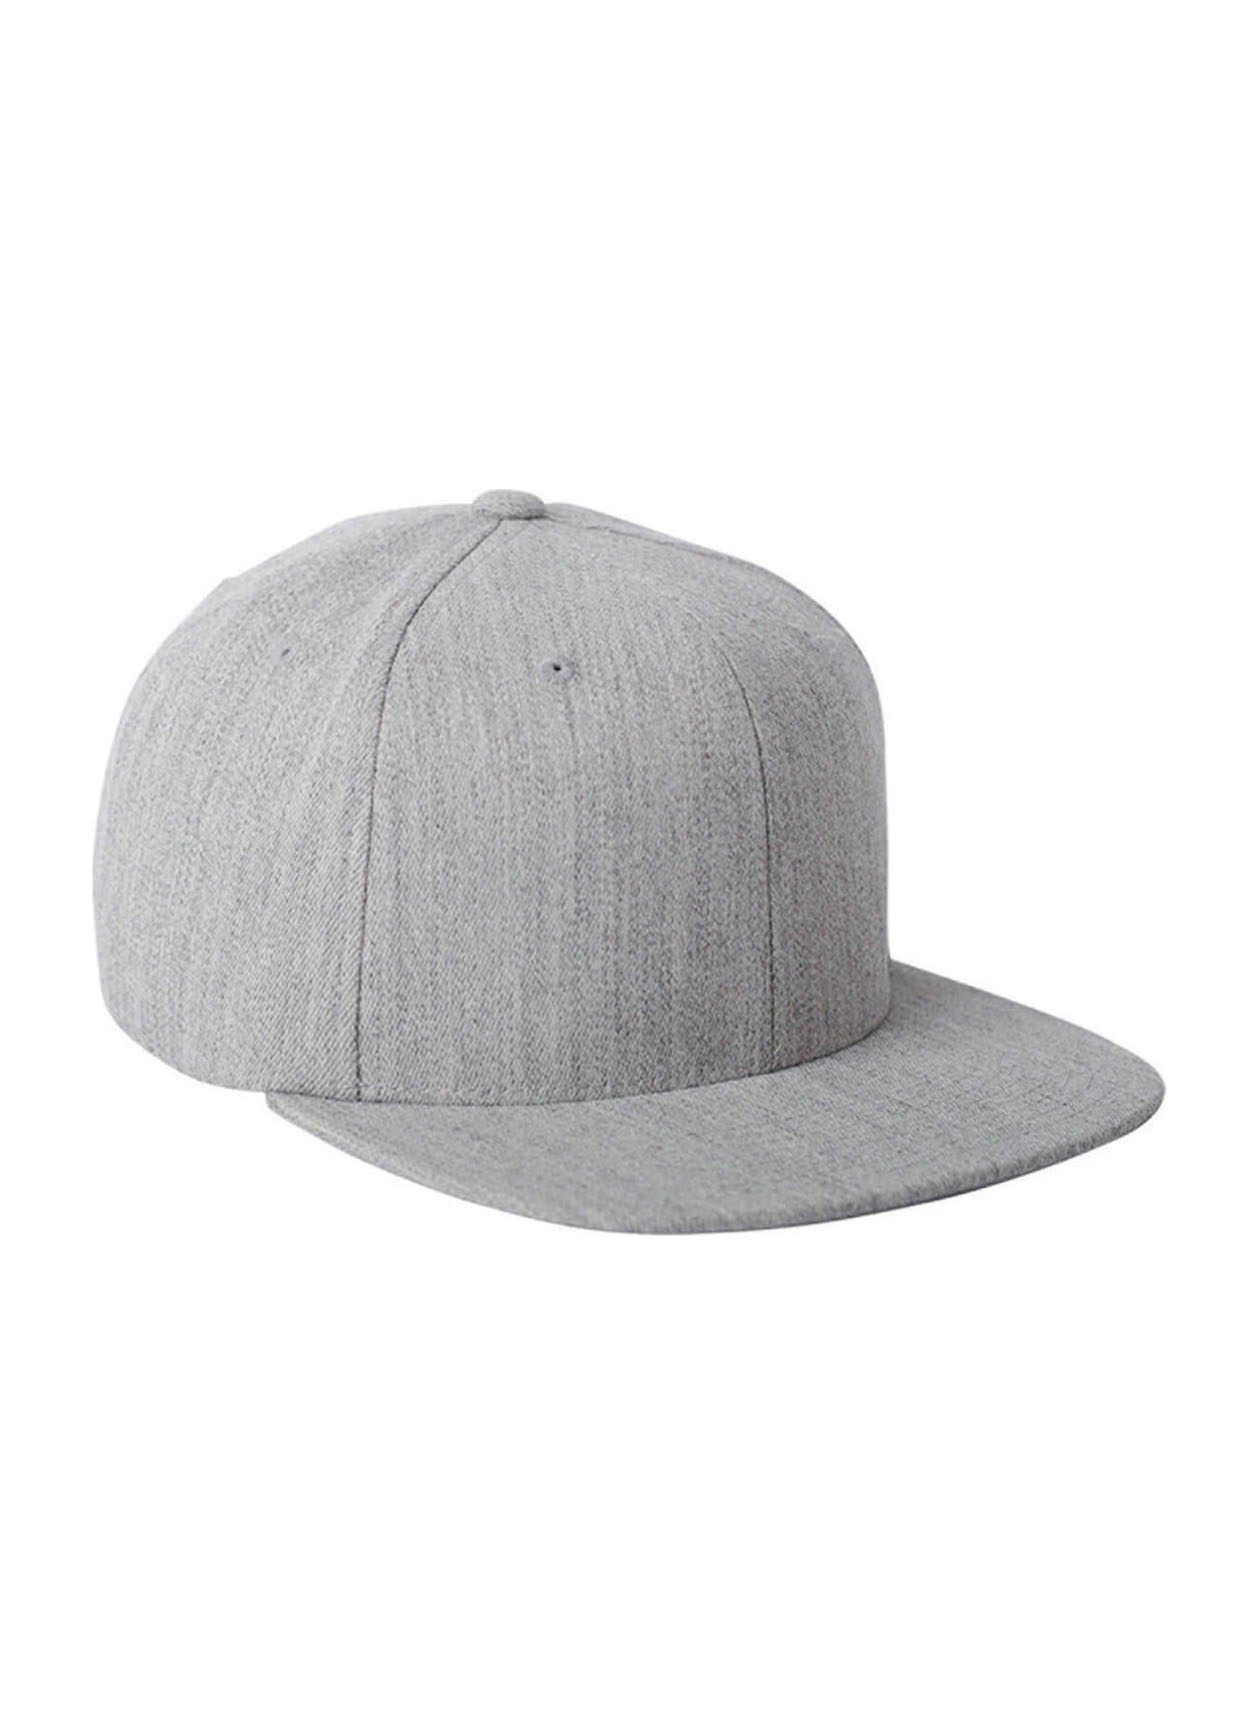 Flexfit Heather Grey Wool Blend Snapback Hat